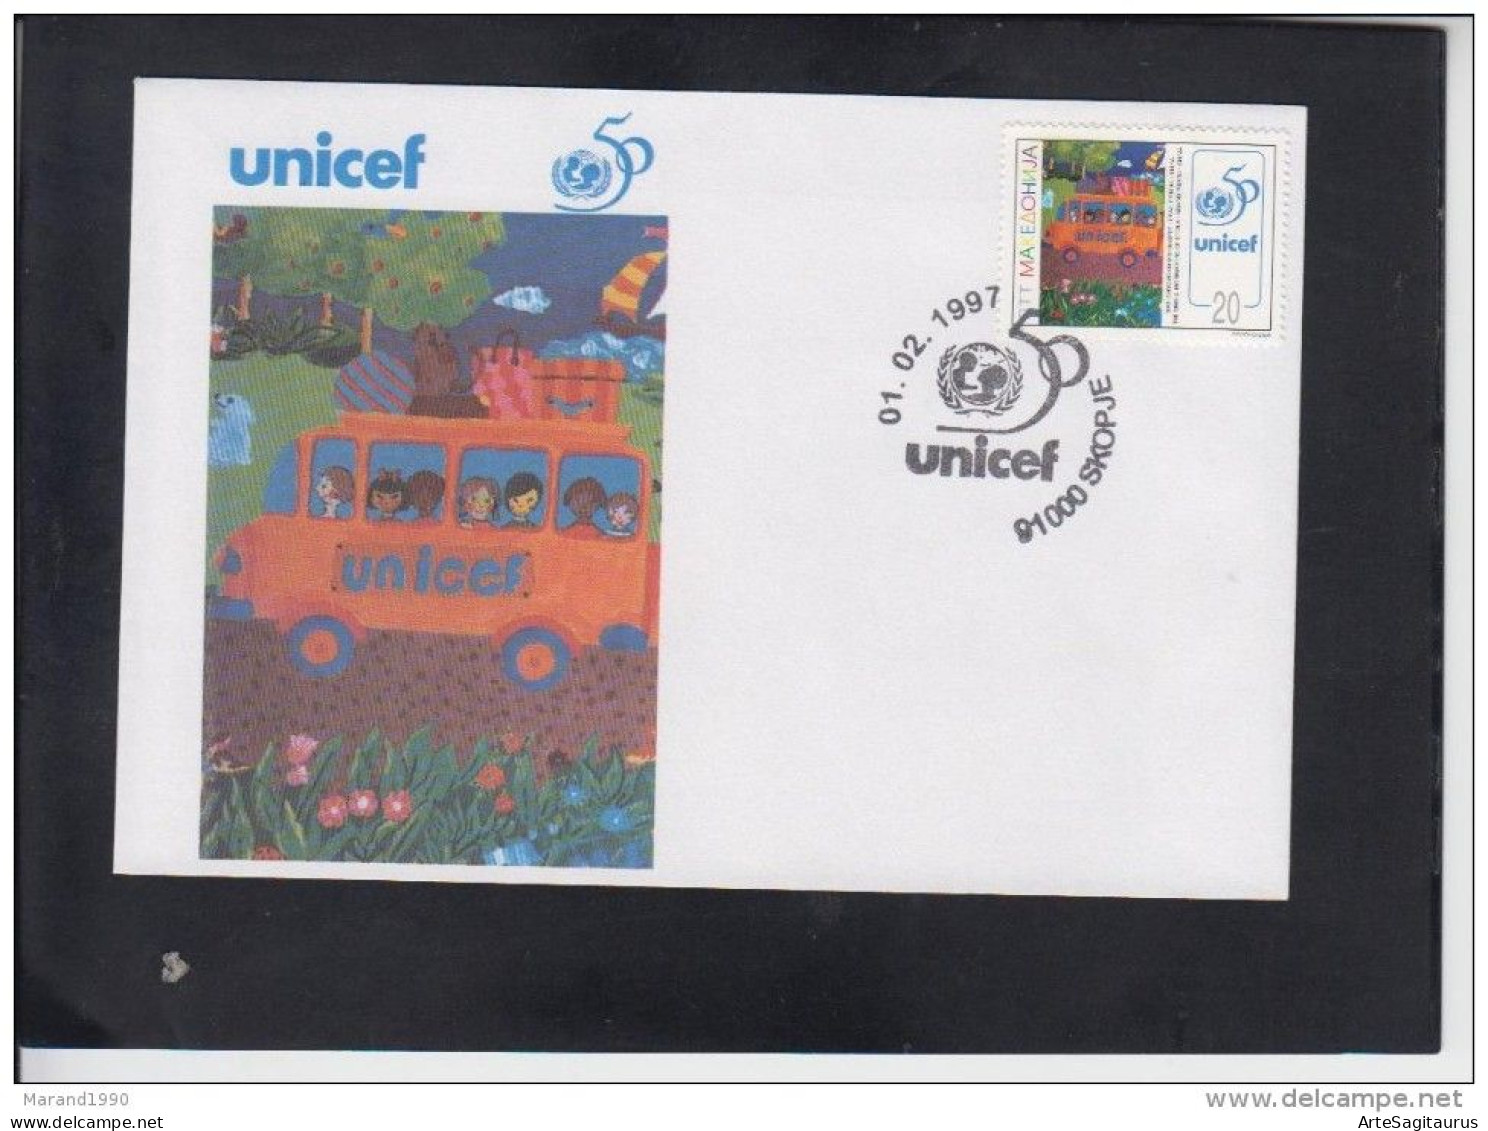 REPUBLIC OF MACEDONIA, 1997, FDC, MICHEL 91 - UNICEF, Art, Transport # - UNICEF